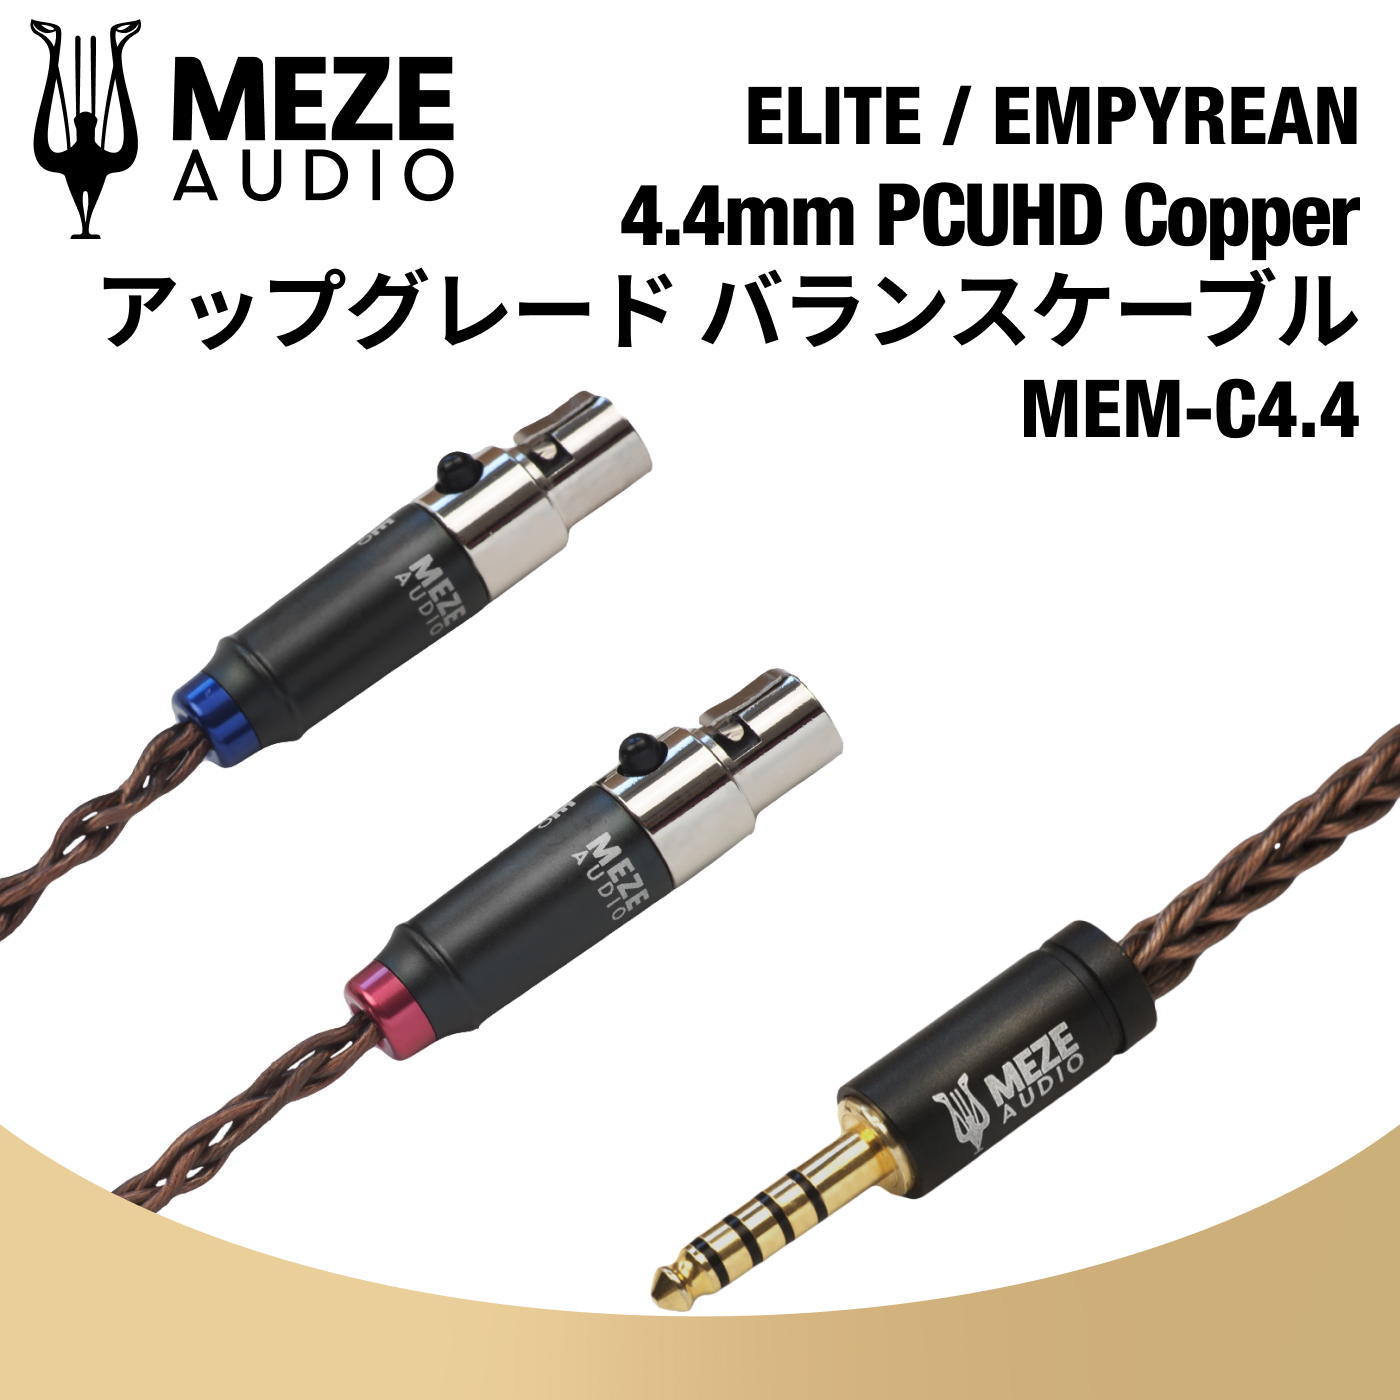 Meze Audio MEM-C4.4 PCUHD アップグレード バランスケーブル 4.4mm ELITE   EMPYREAN メゼオーディオ 国内正規代理店